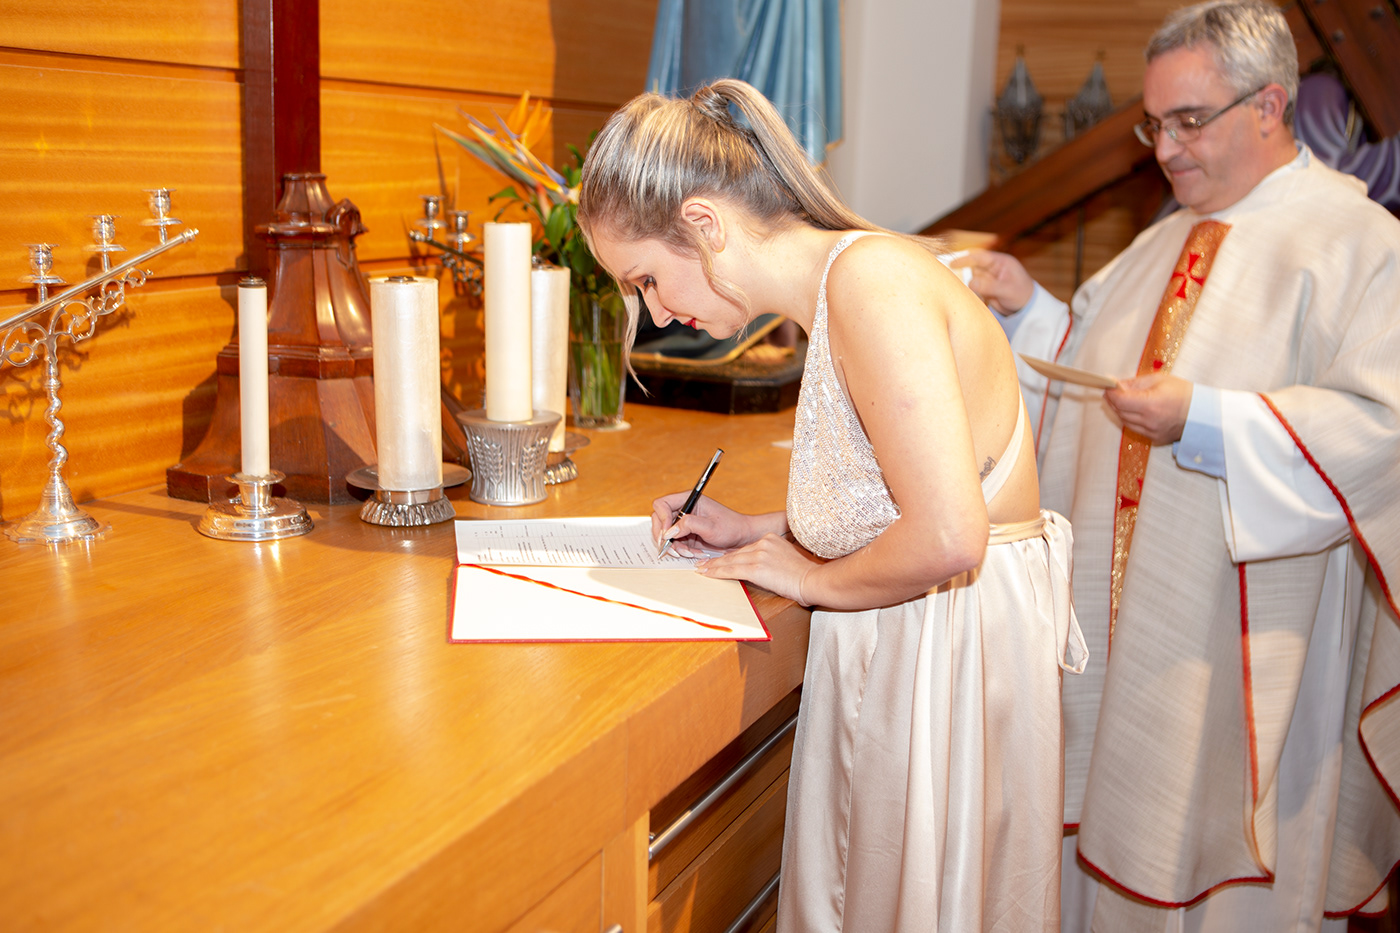 reycisco batizado Igreja casamento Funchal Madeira mariage baptiz